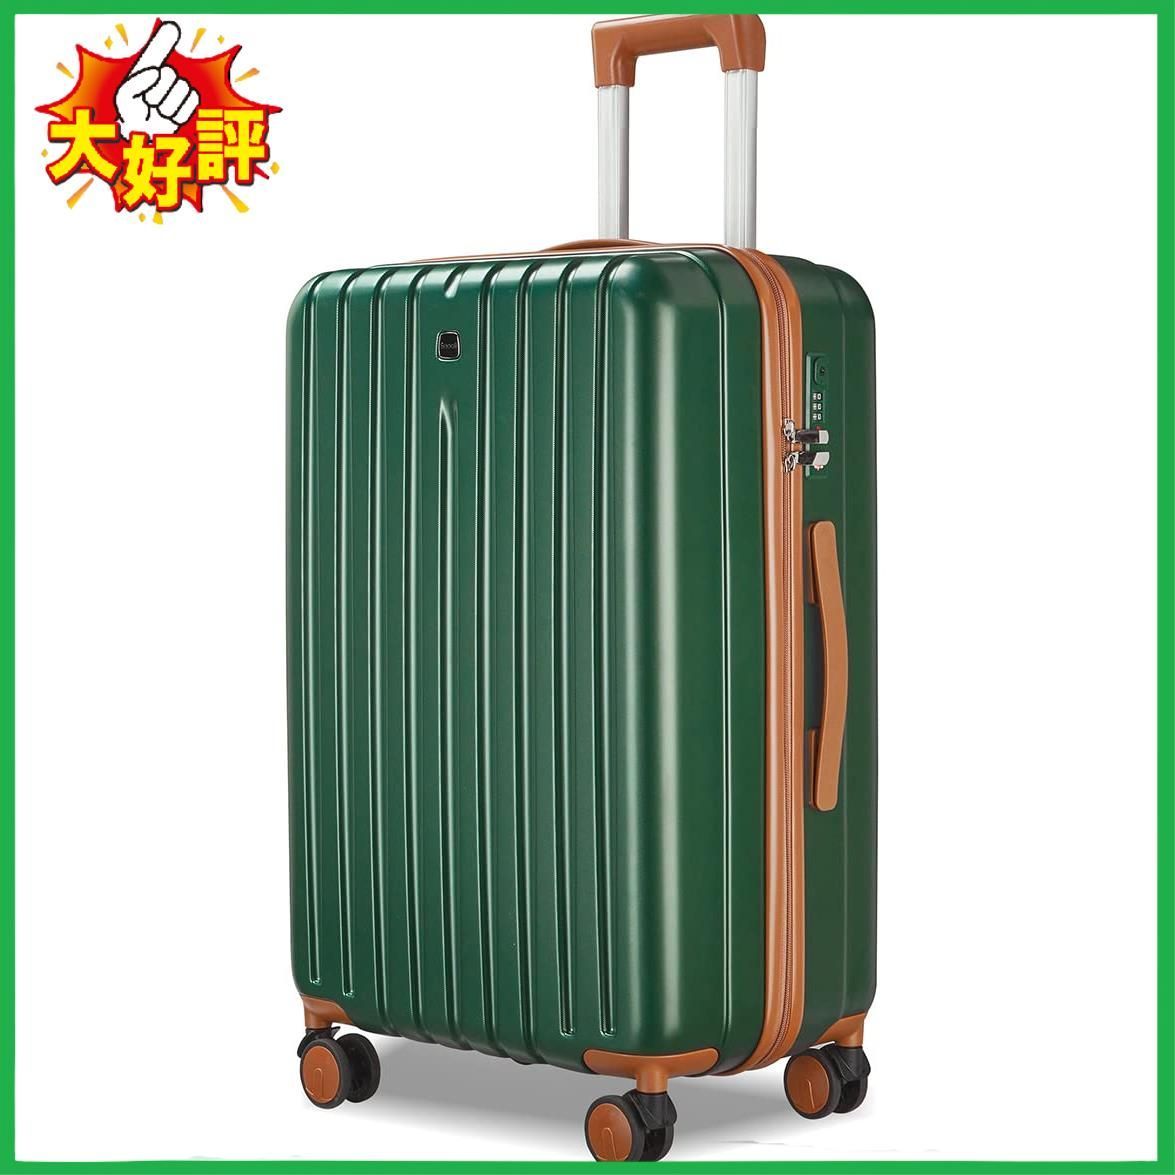 □SnooII スーツケース キャリーバッグ キャリーケース 機内持込可 大容量 大型軽量 8輪 静音 TSAロック搭載  多機能ボトルホルダー付きタイプ (M サイズ(65L), グリーン)